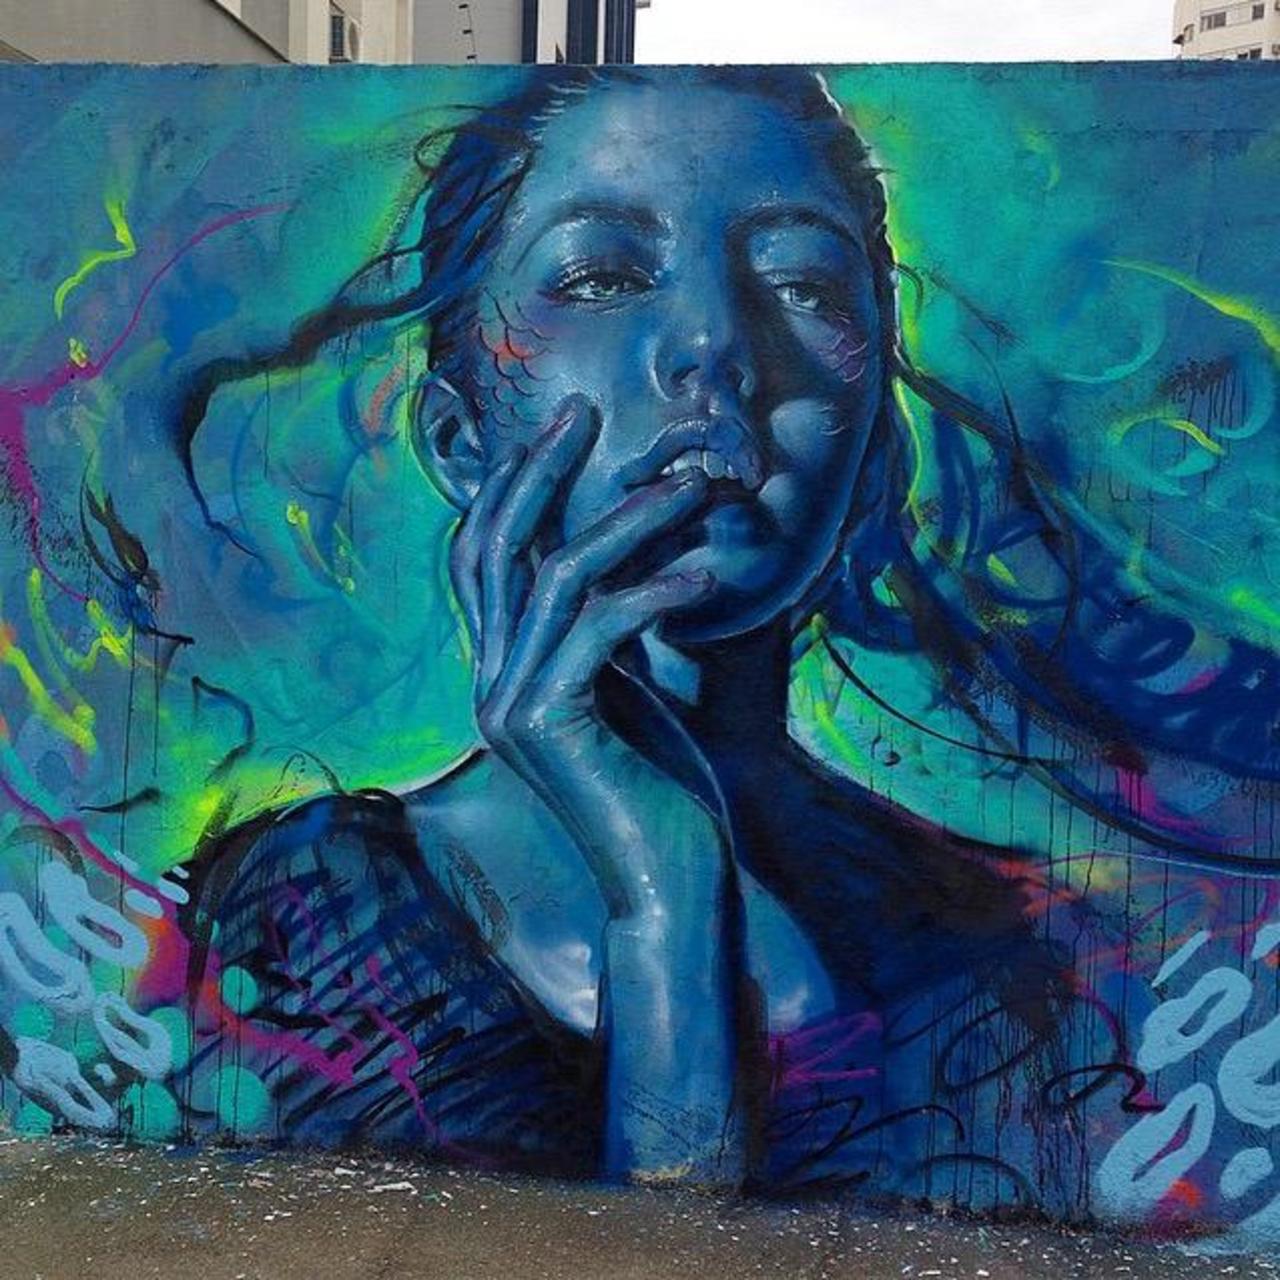 Thiago Valdi new Street Art piece titled 'Day Dreamer' #art #mural #graffiti #streetart http://t.co/3UodbQm48I …… http://twitter.com/GoogleStreetArt/status/652604458048876544/photo/1/large?utm_source=fb&utm_medium=fb&utm_campaign=charlesjackso14&utm_content=652732443099795456